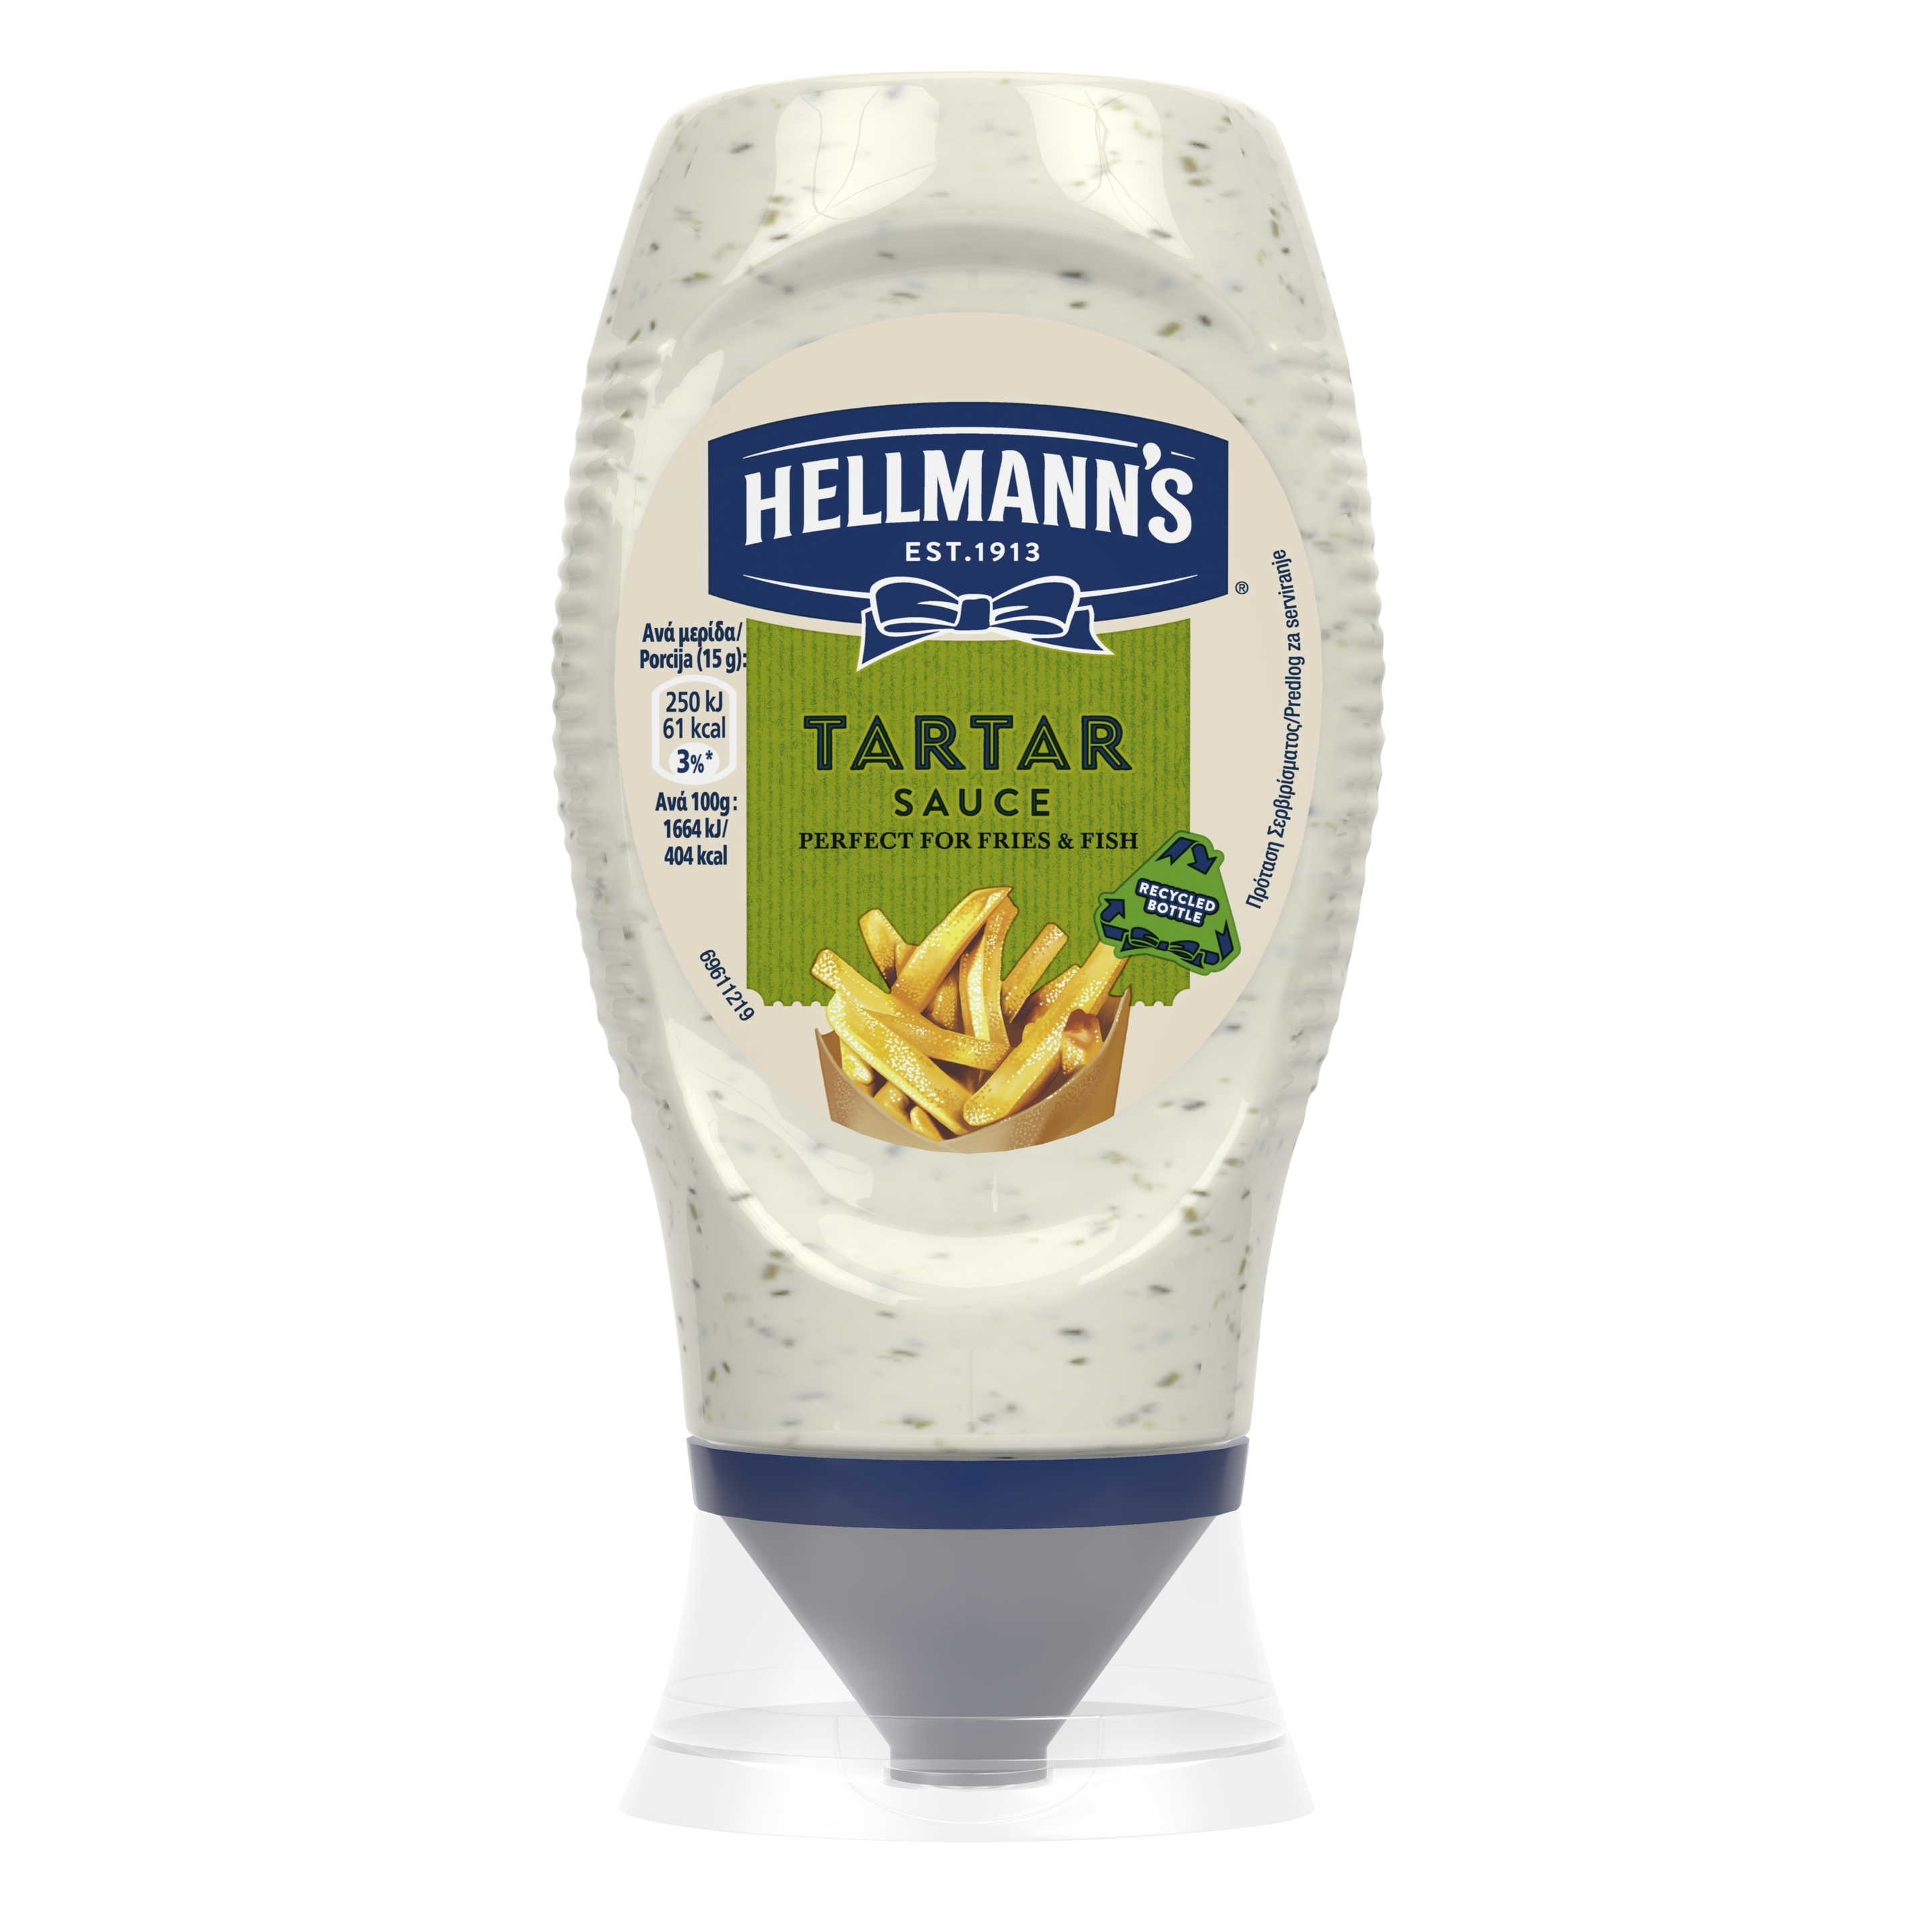 Hellmann's Tartar sauce